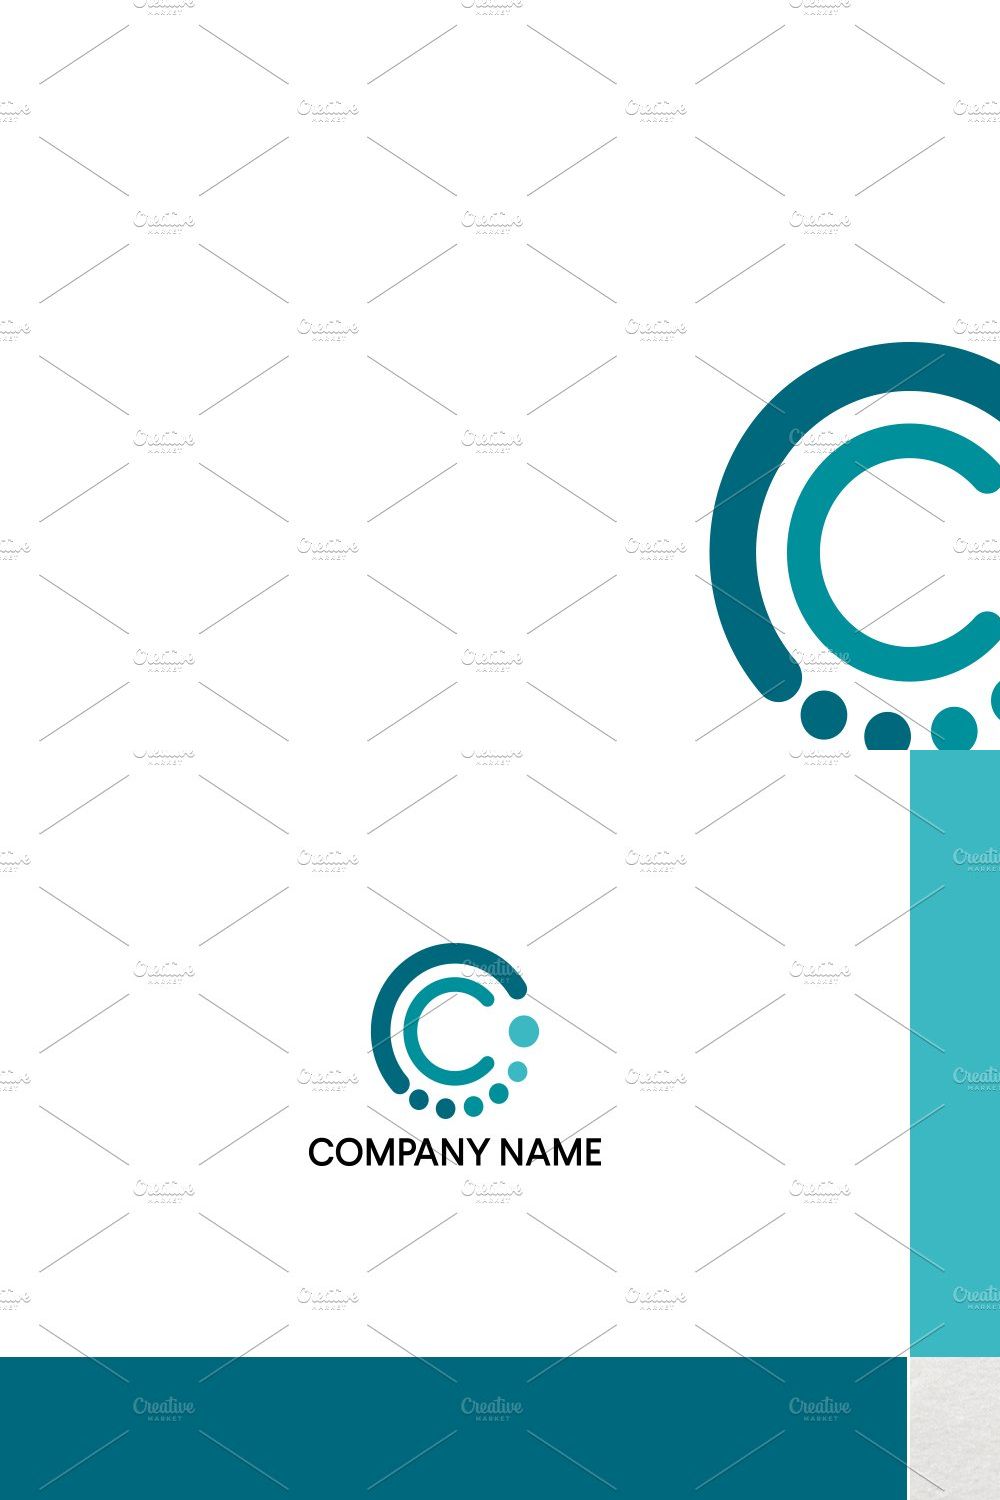 Letter C logo design pinterest preview image.